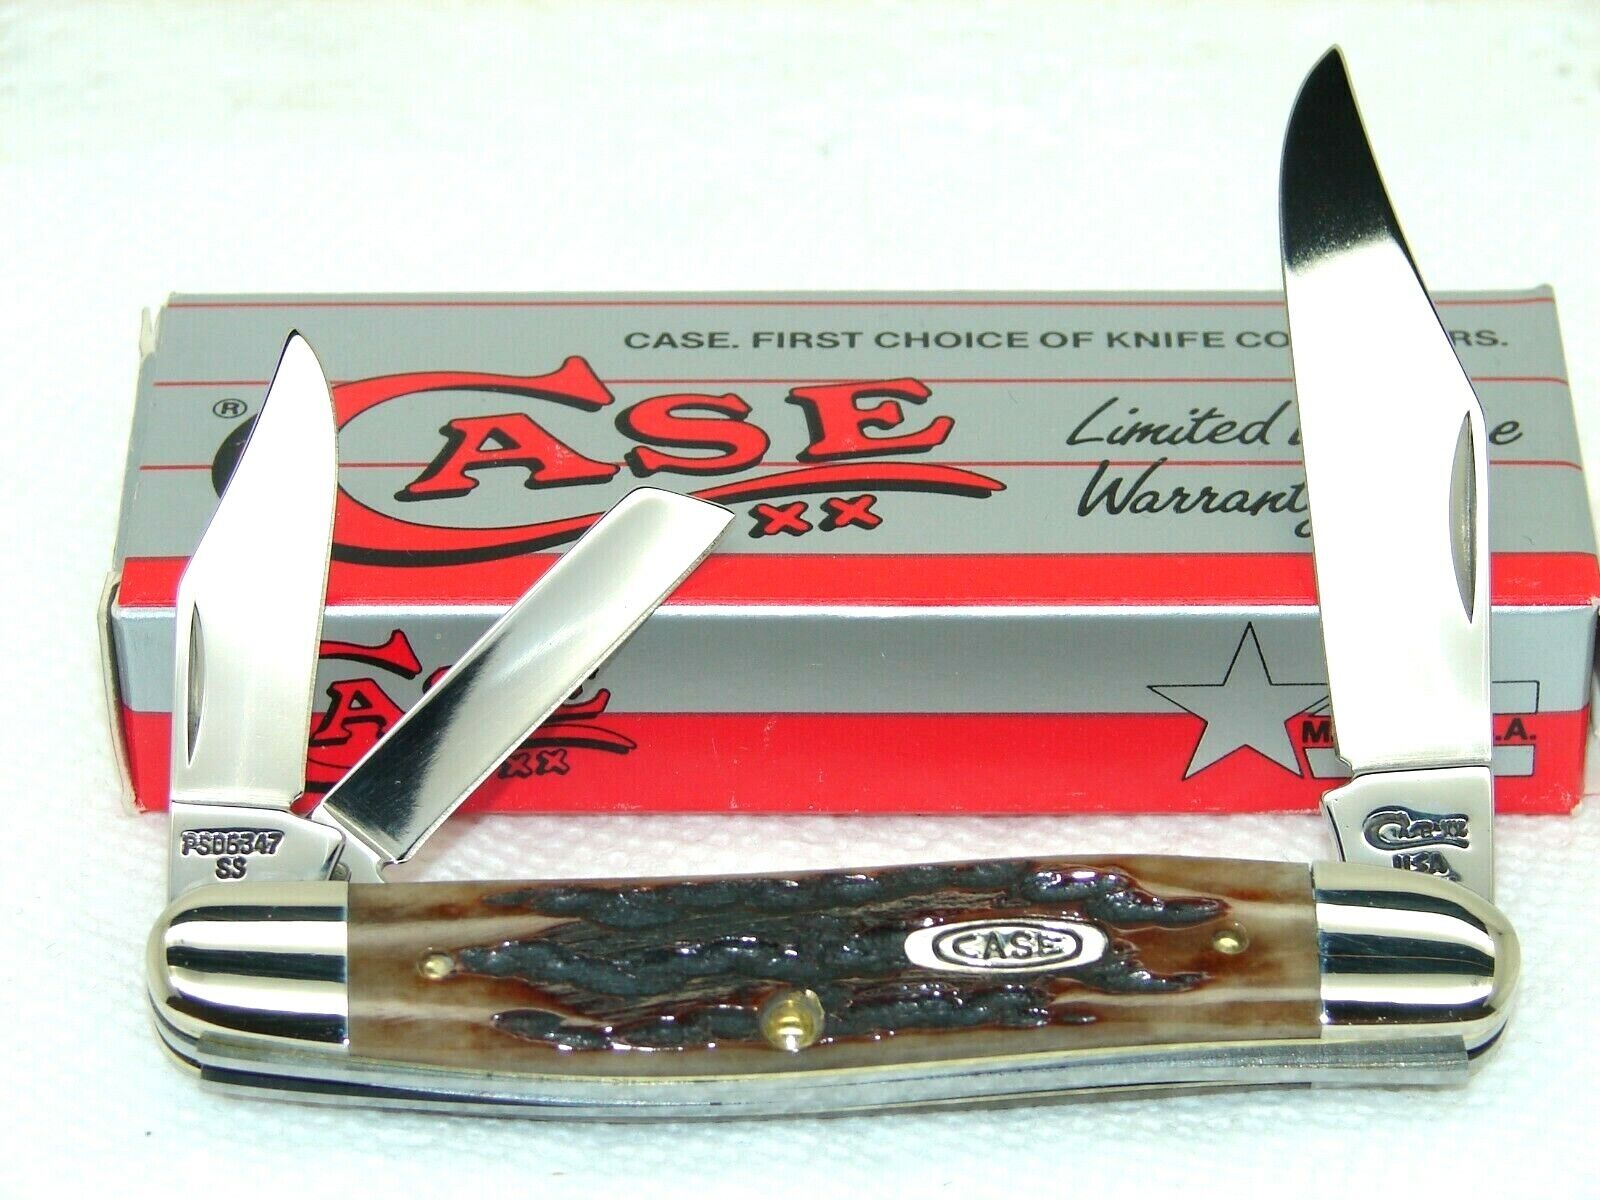 CASE XX USA,1993, 6347 STOCKMAN WHITTLER KNIFE, PEACHSEED JIG BONE, SCARCE, MINT